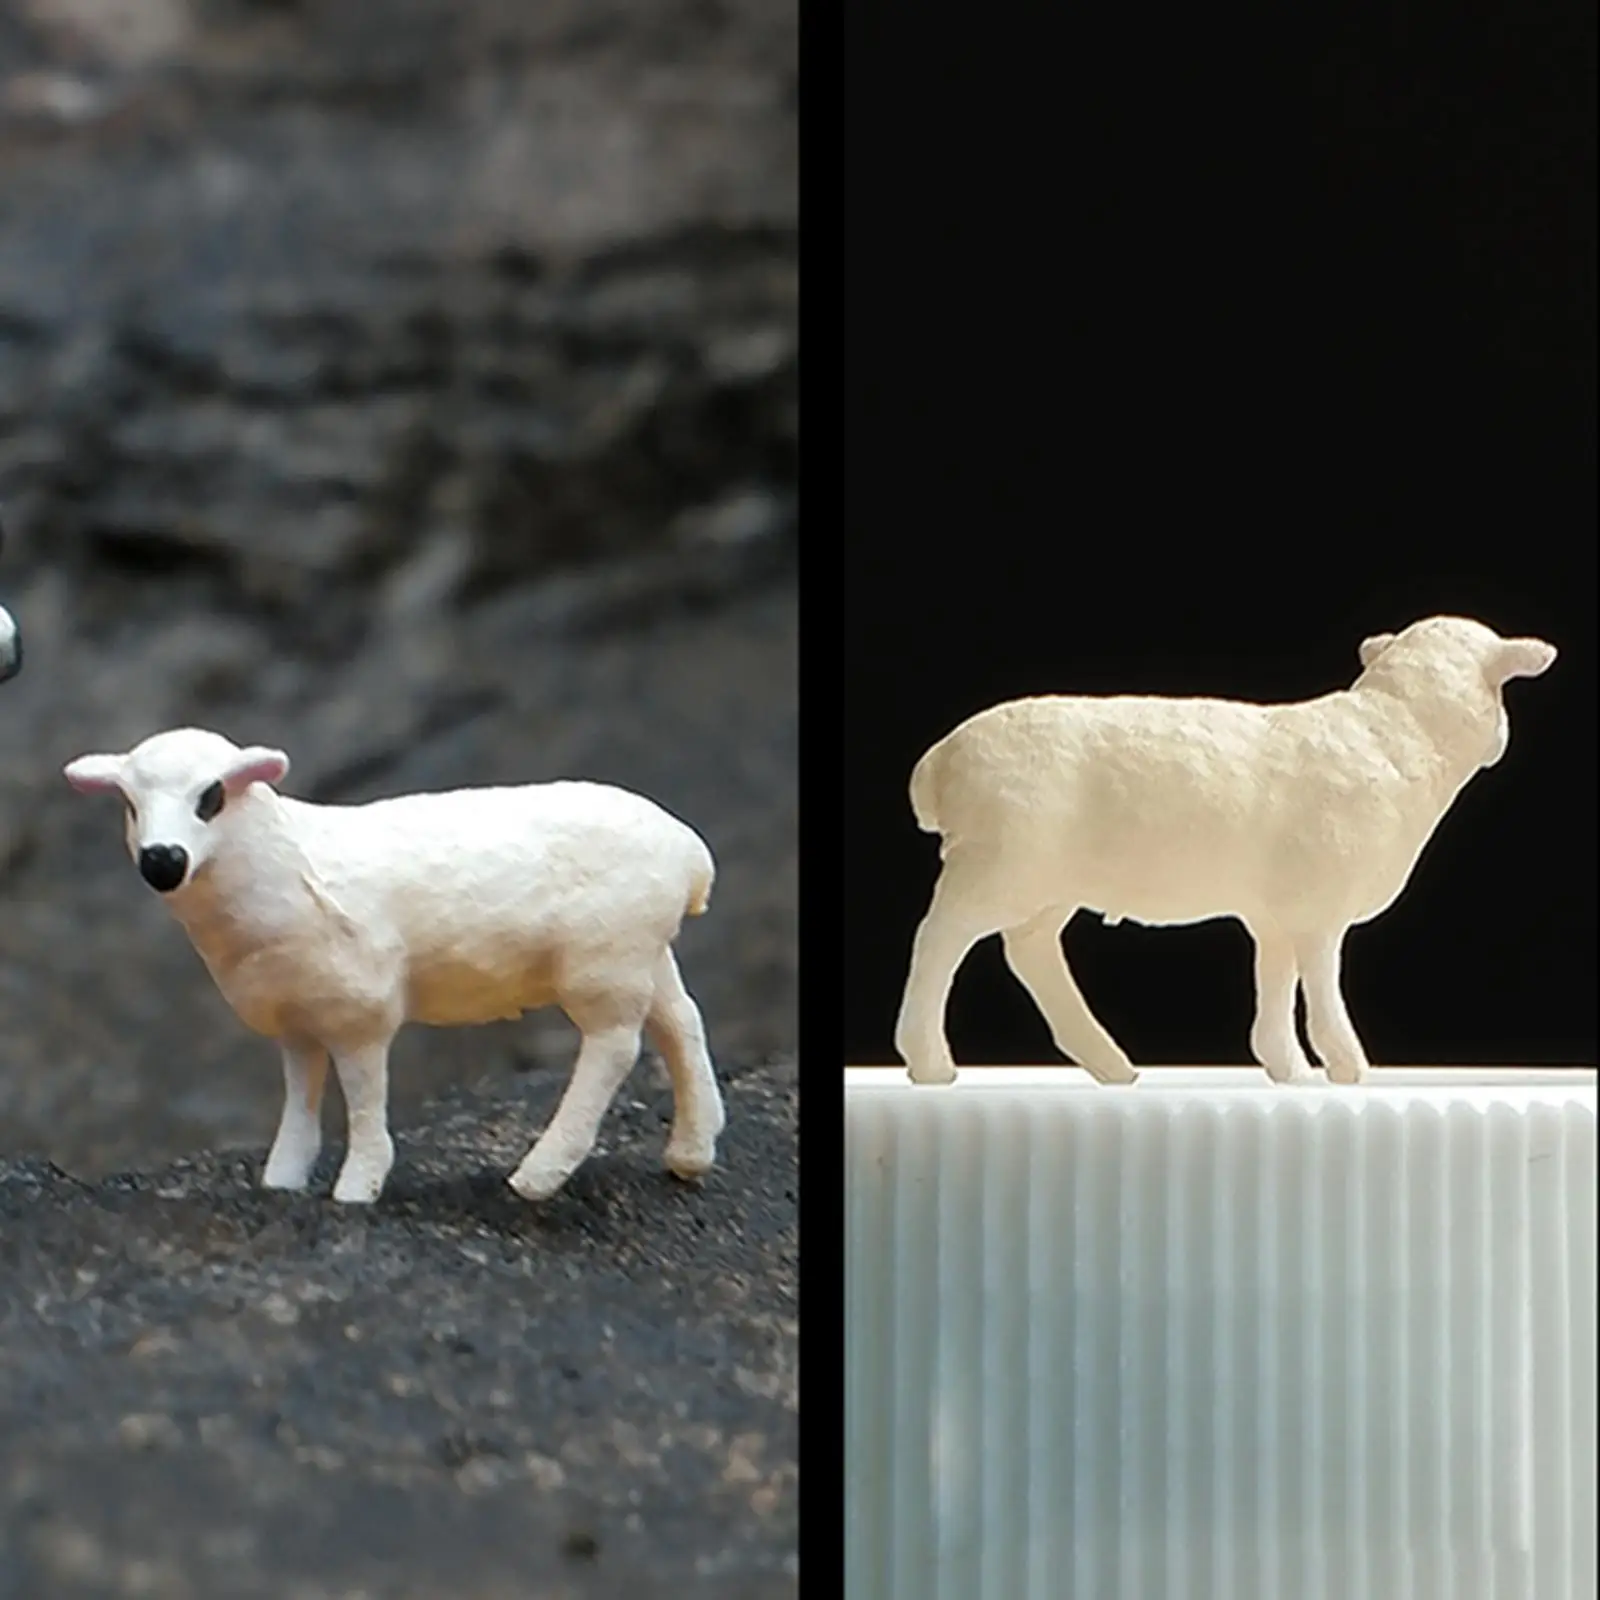 Animal Figures ,Sheep Model, 1:64 Realistic Figurine Model ,Animal Figurine ,Ornament Miniature Scene Layout Photo Props